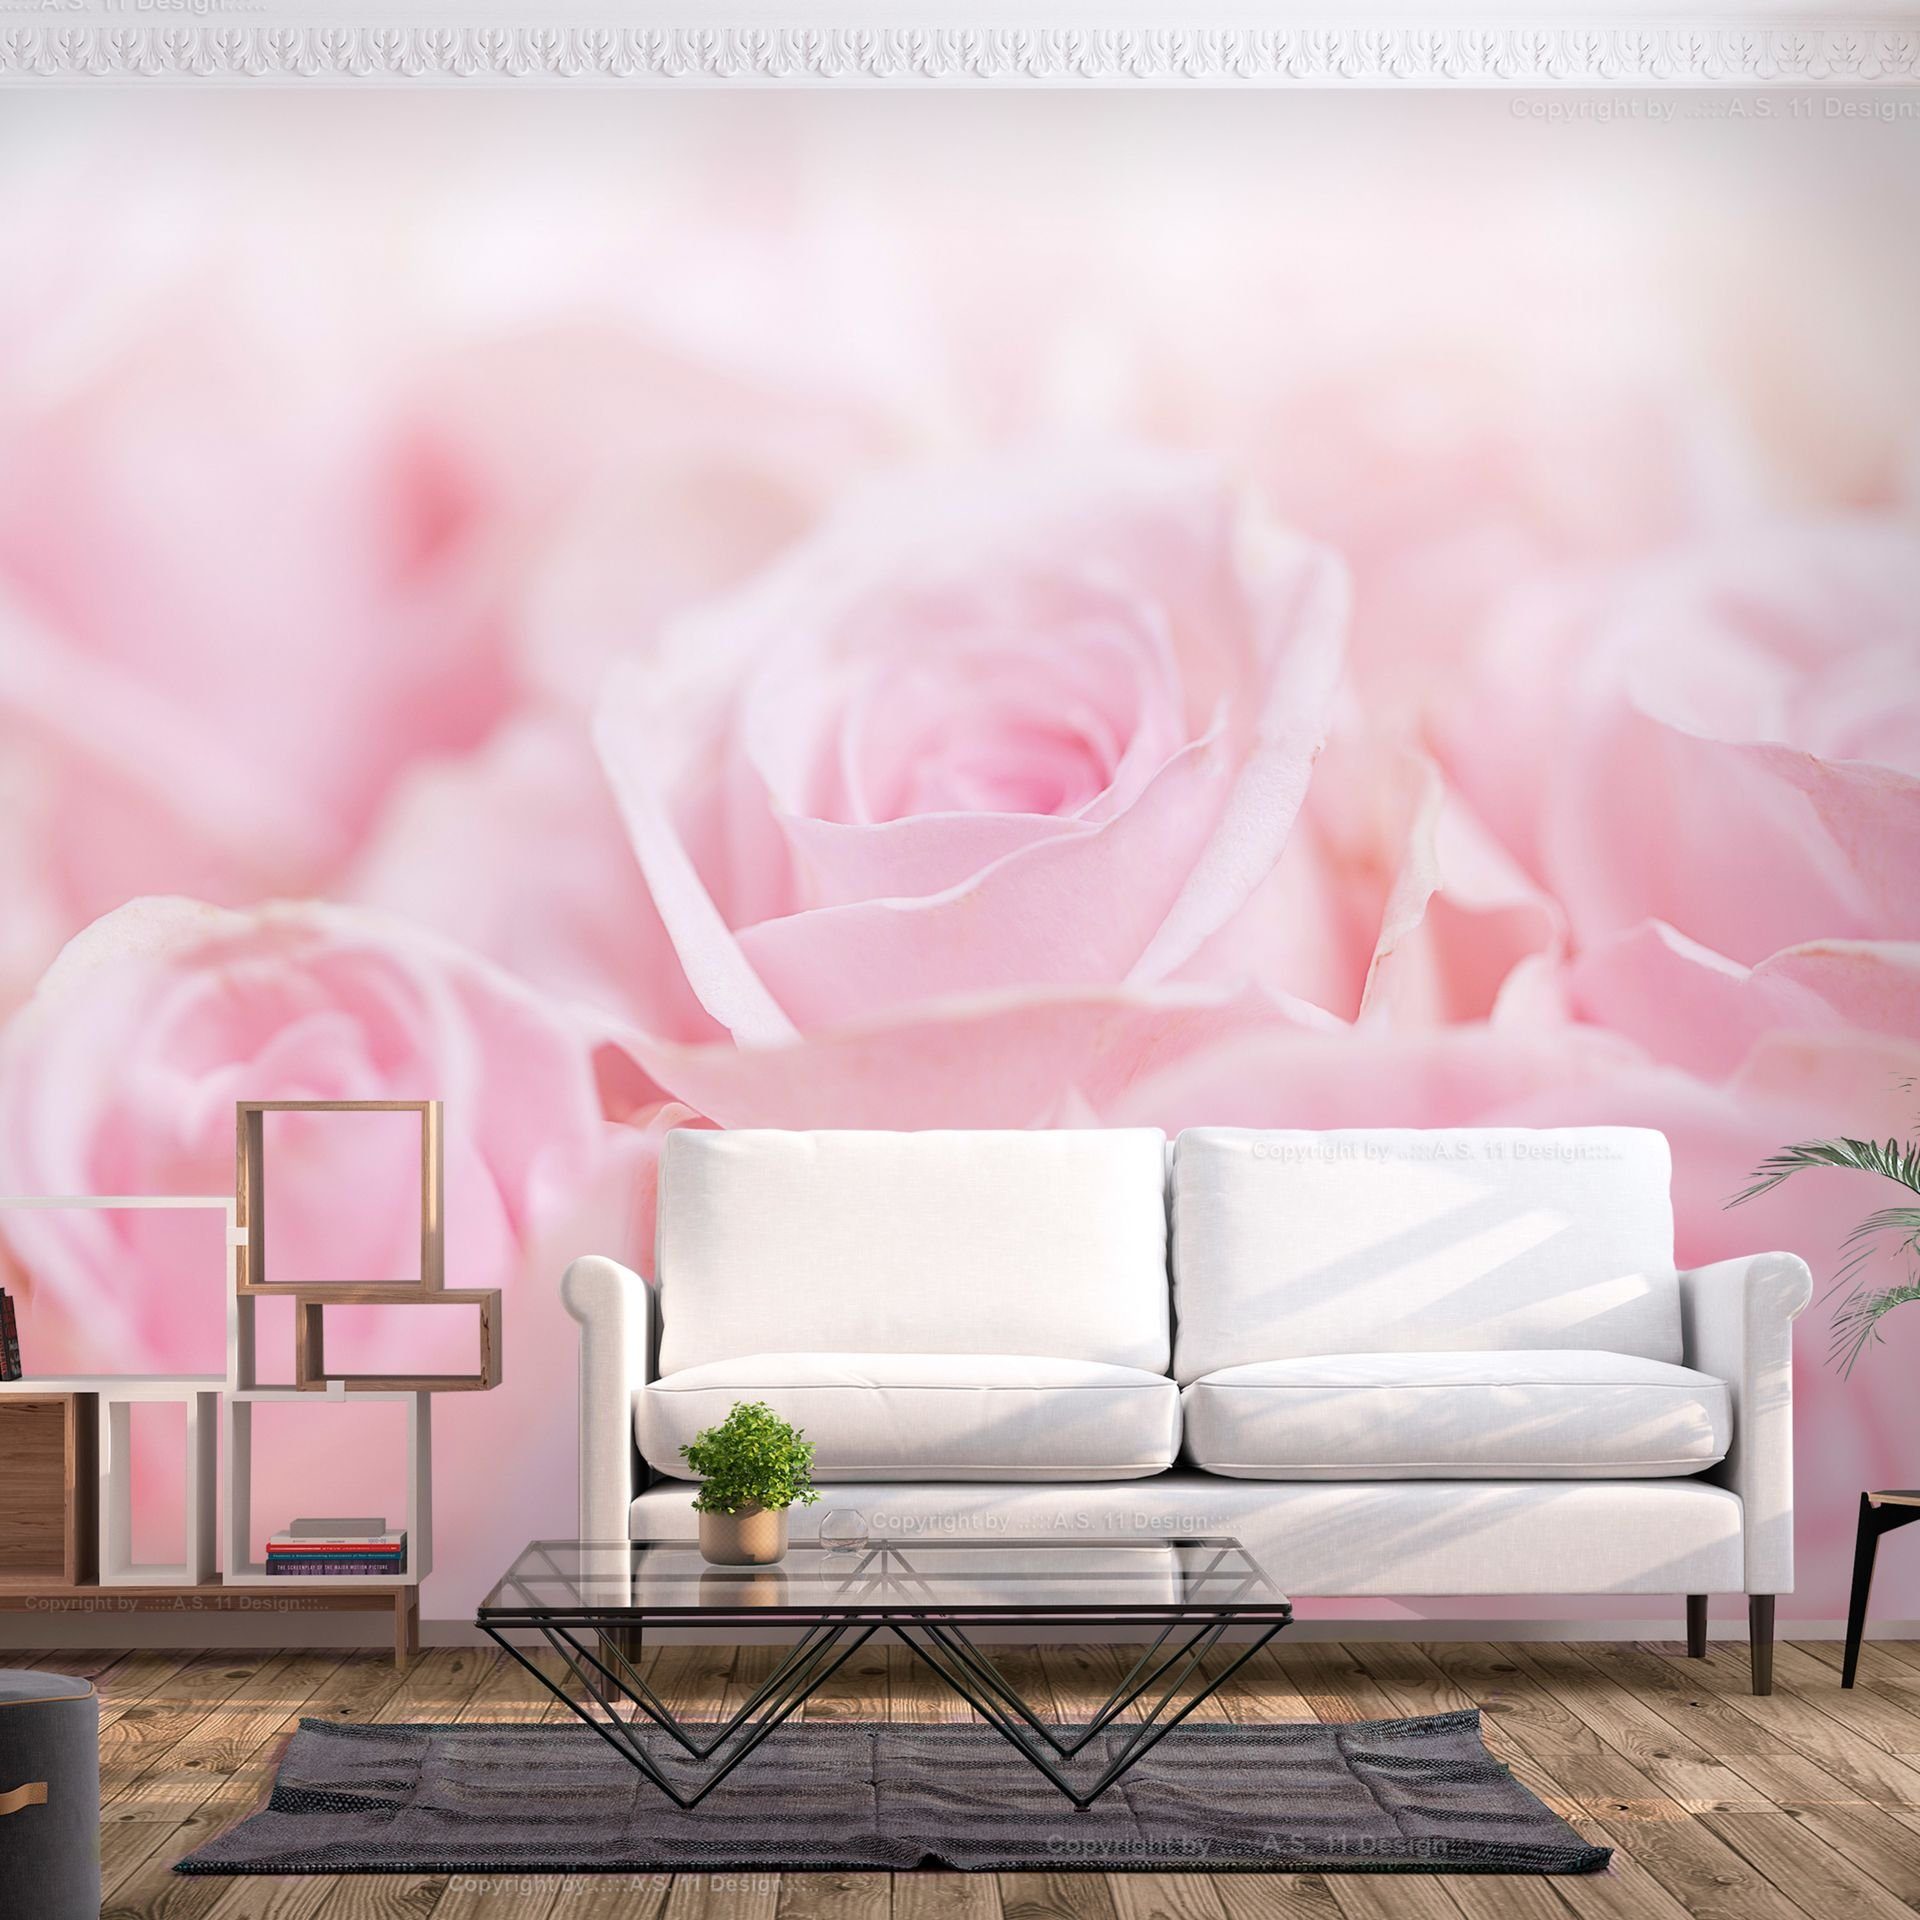 KUNSTLOFT Vliestapete Ocean of Roses 0.98x0.7 m, halb-matt, matt, lichtbeständige Design Tapete